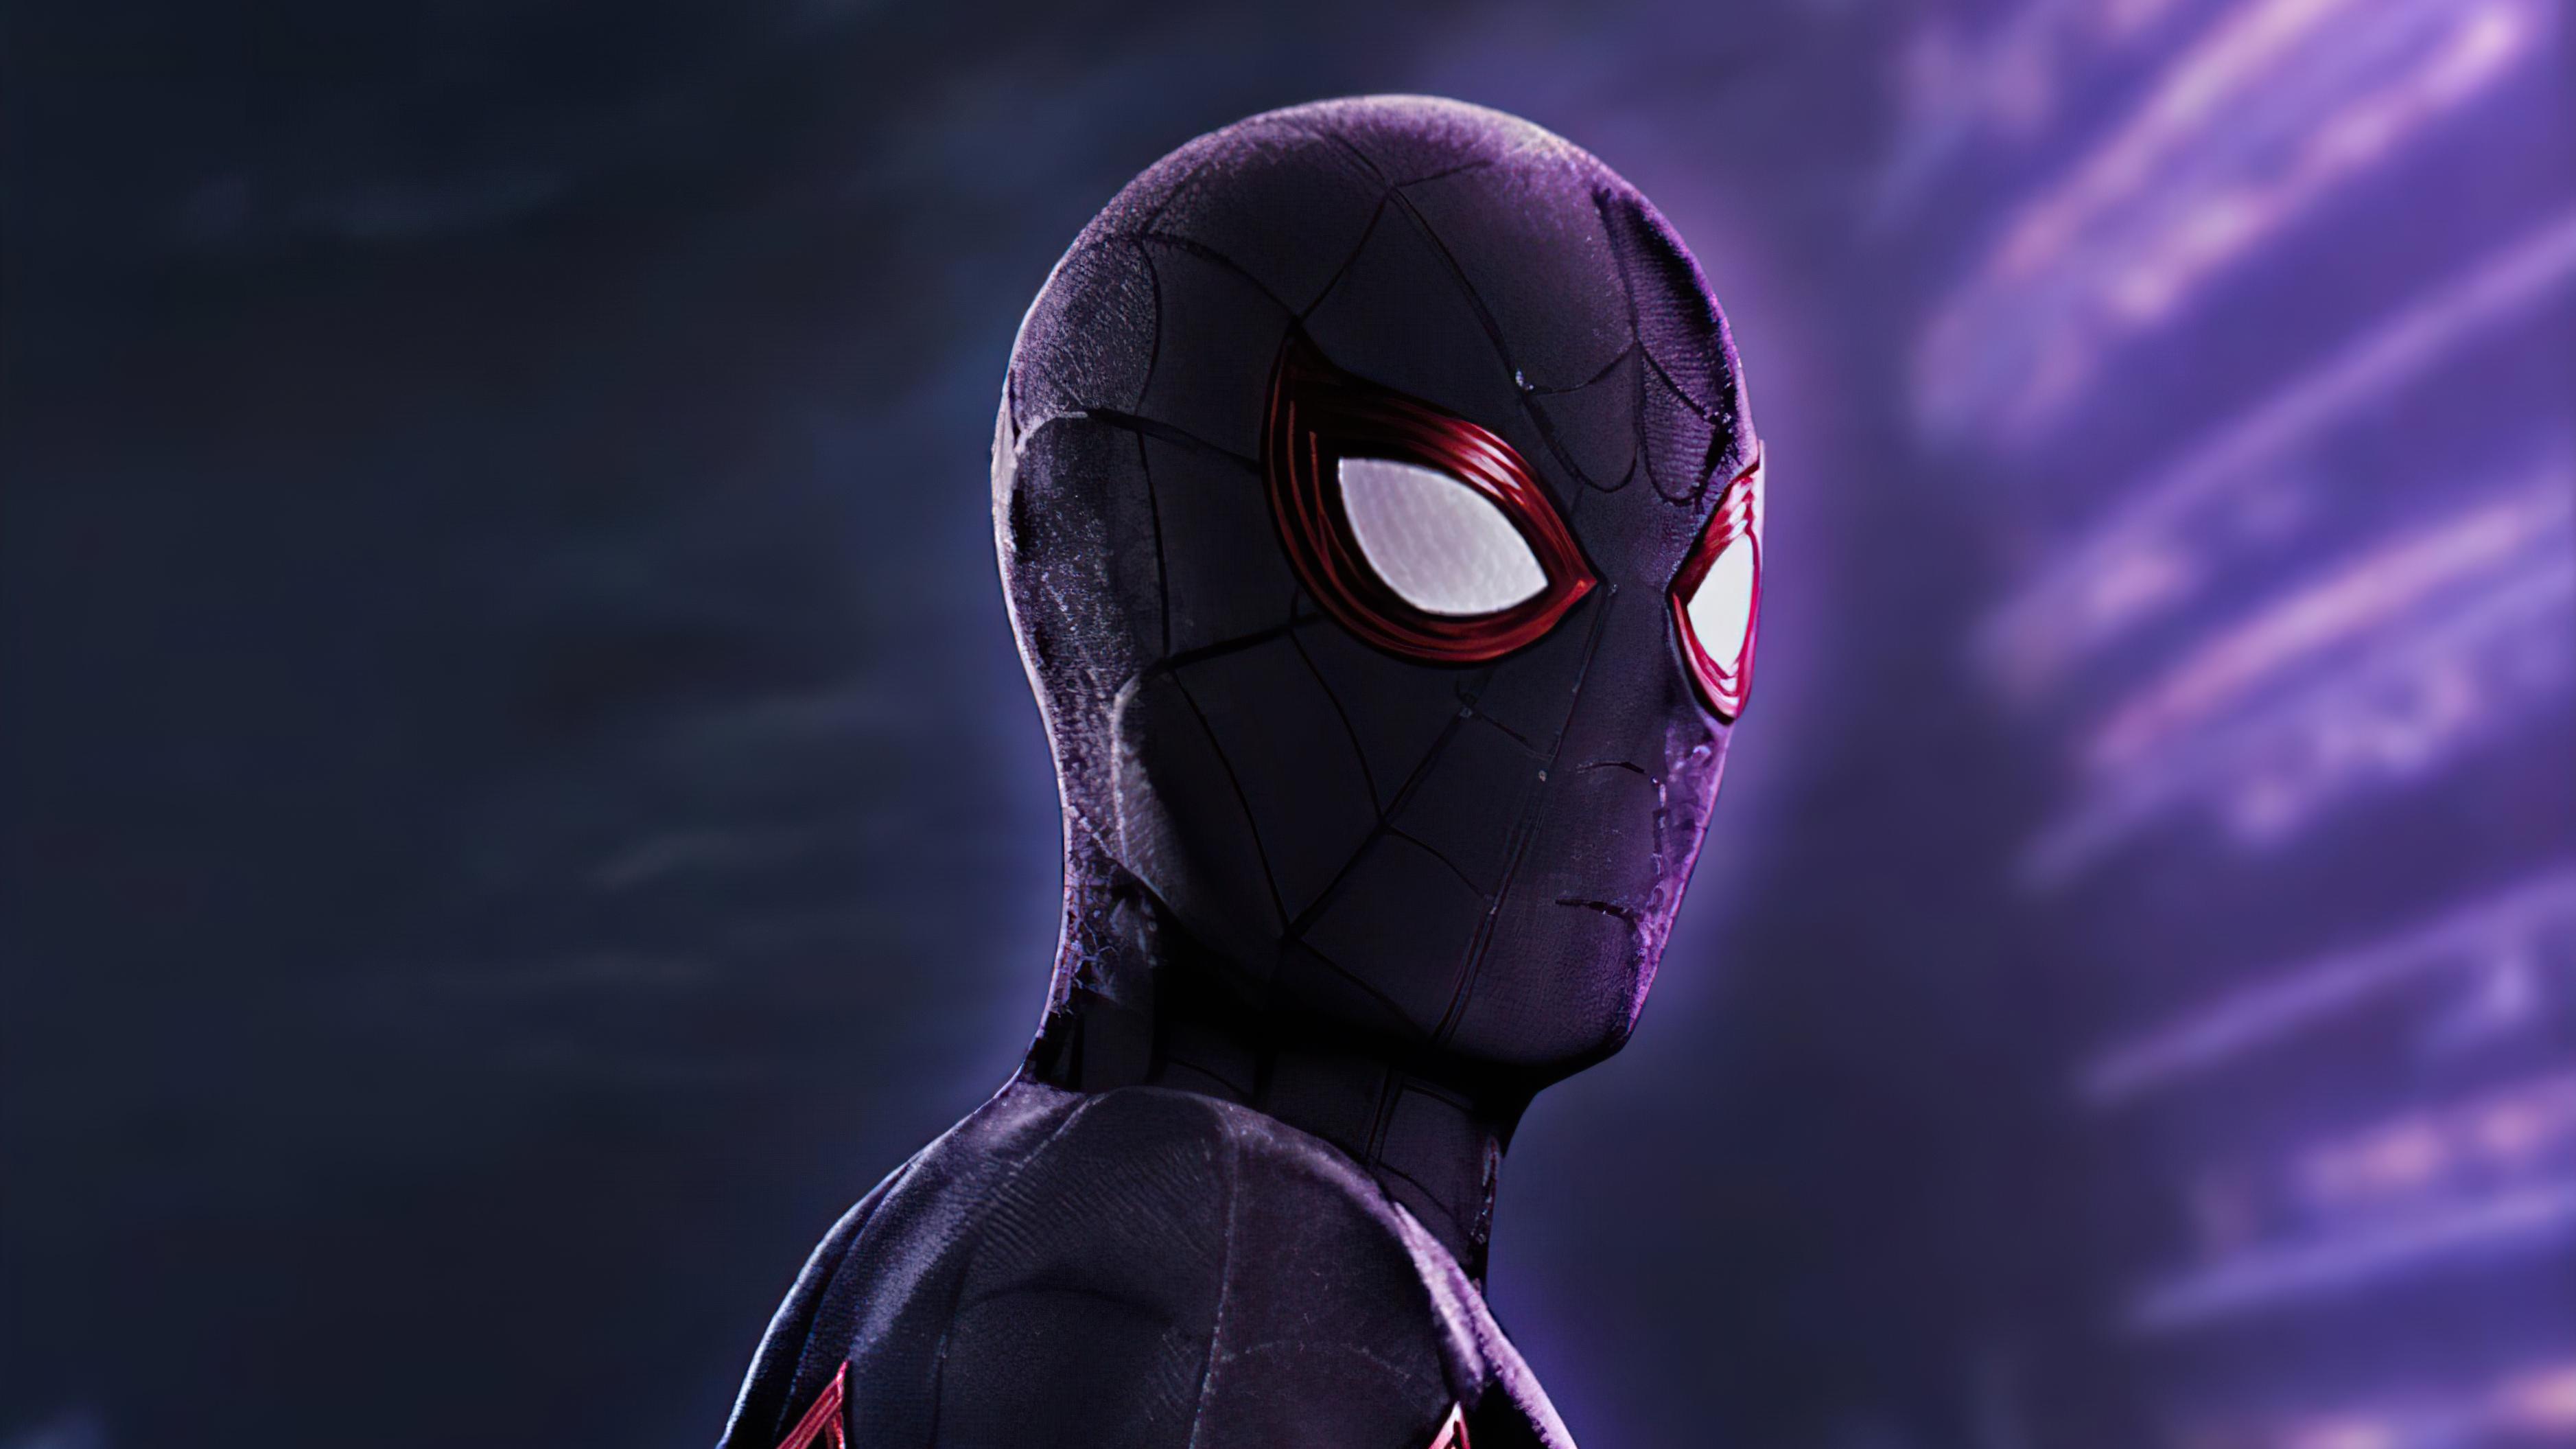 Ics Spider Man HD Wallpaper By Valentin Romero